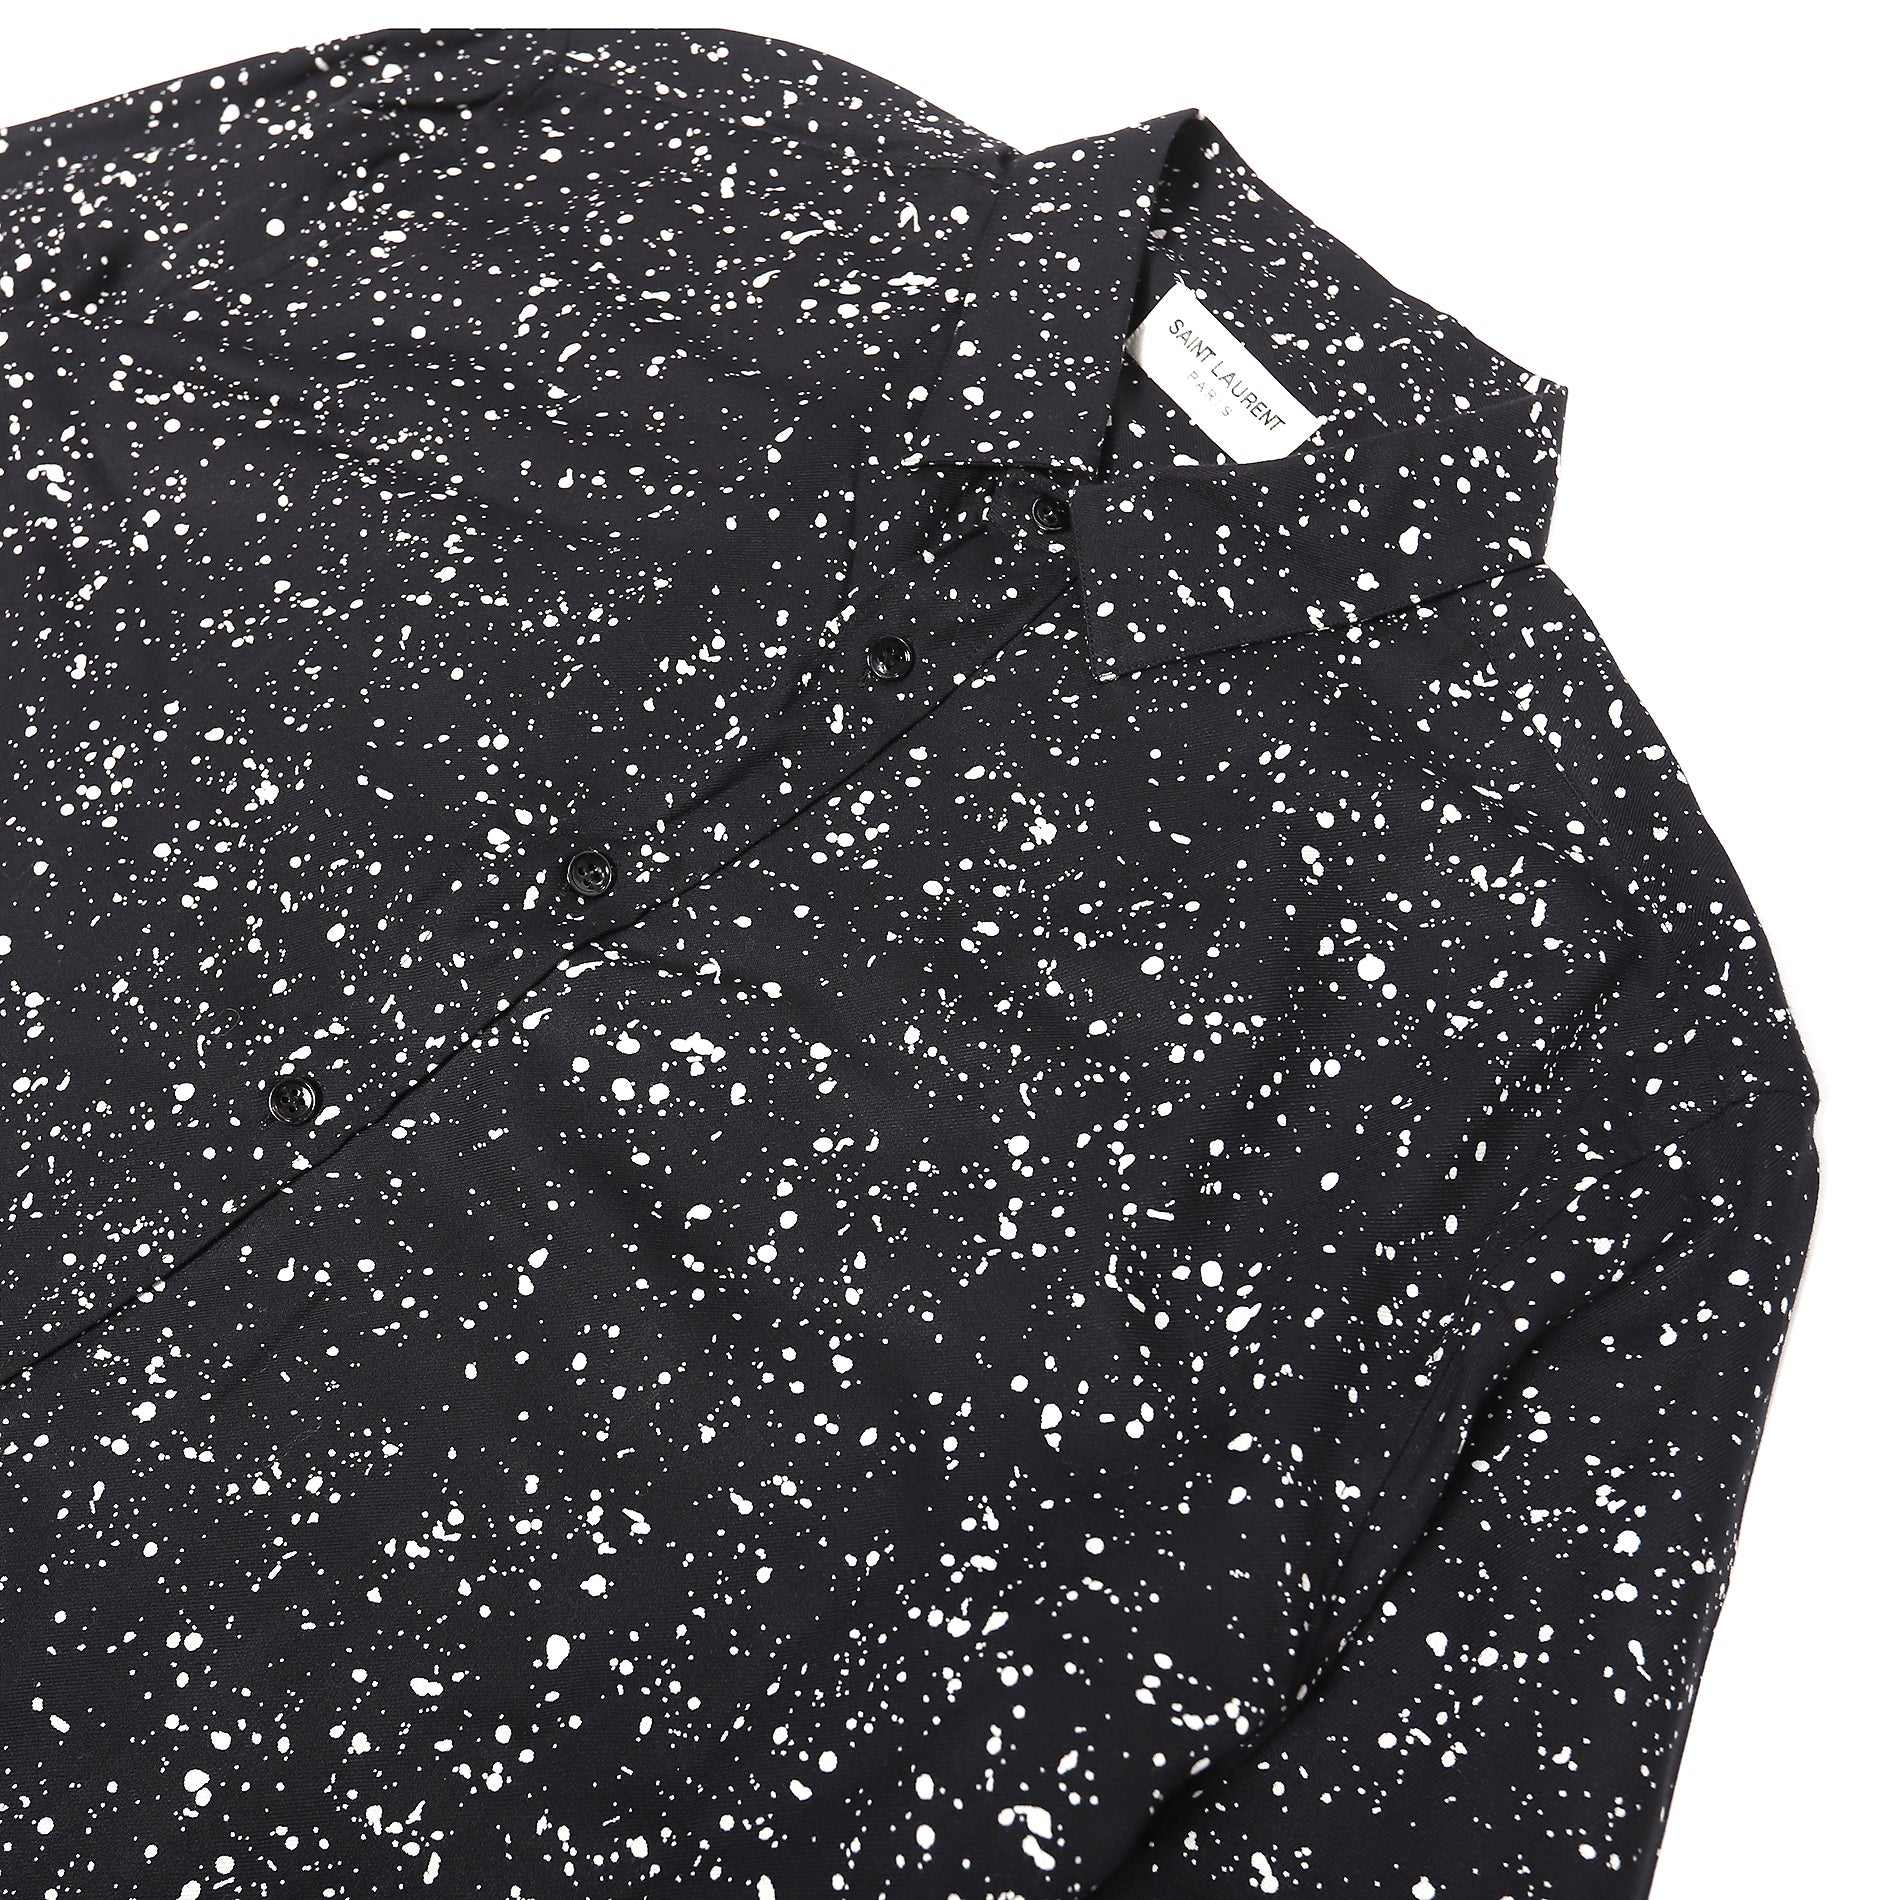 Saint Laurent FW15 Paint Splatter Look Viscose Shirt